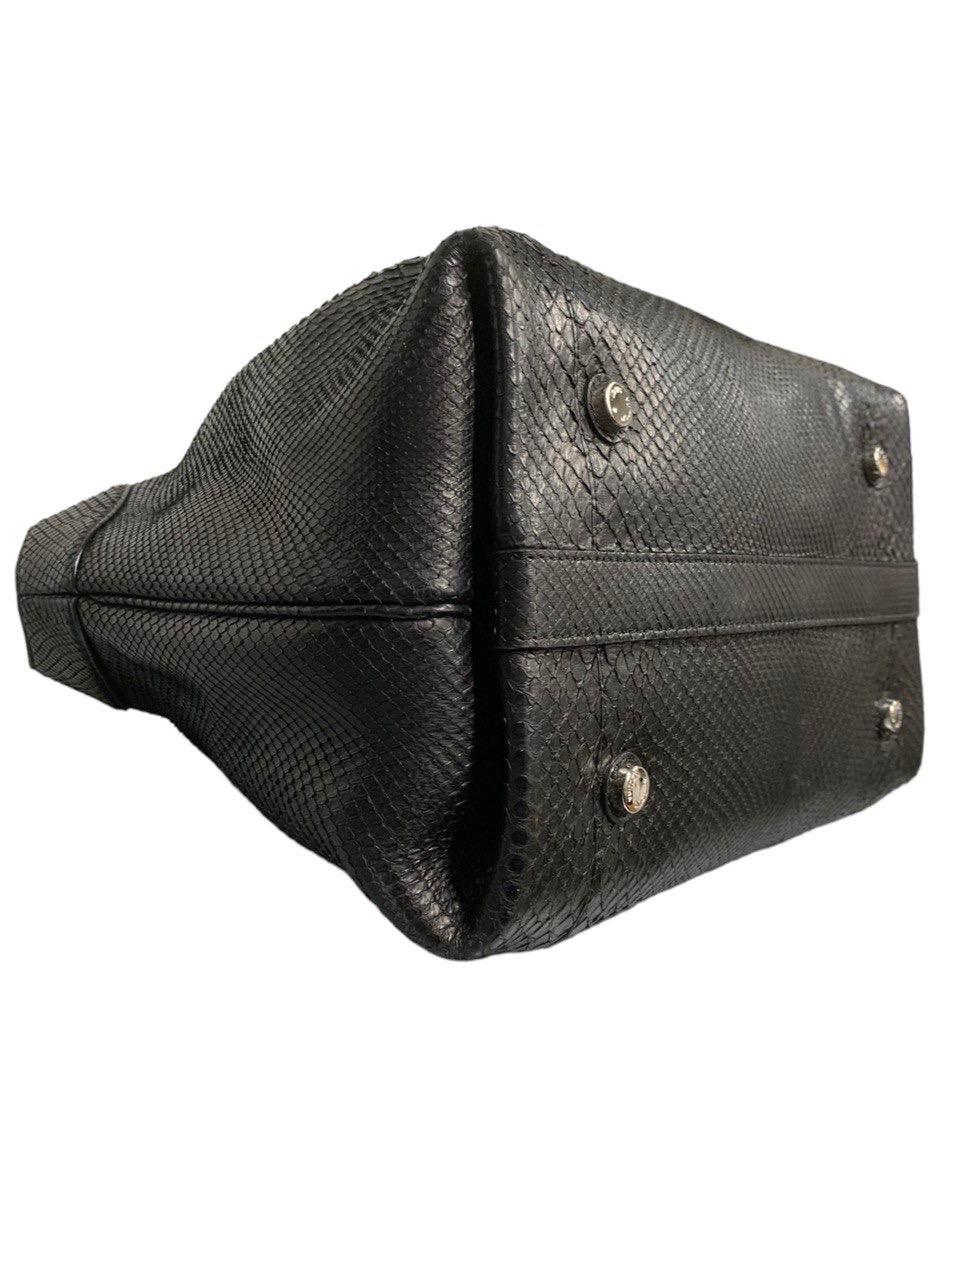 Louis Vuitton Mahina Cirrus Black Piton Top Handle Bag For Sale 2